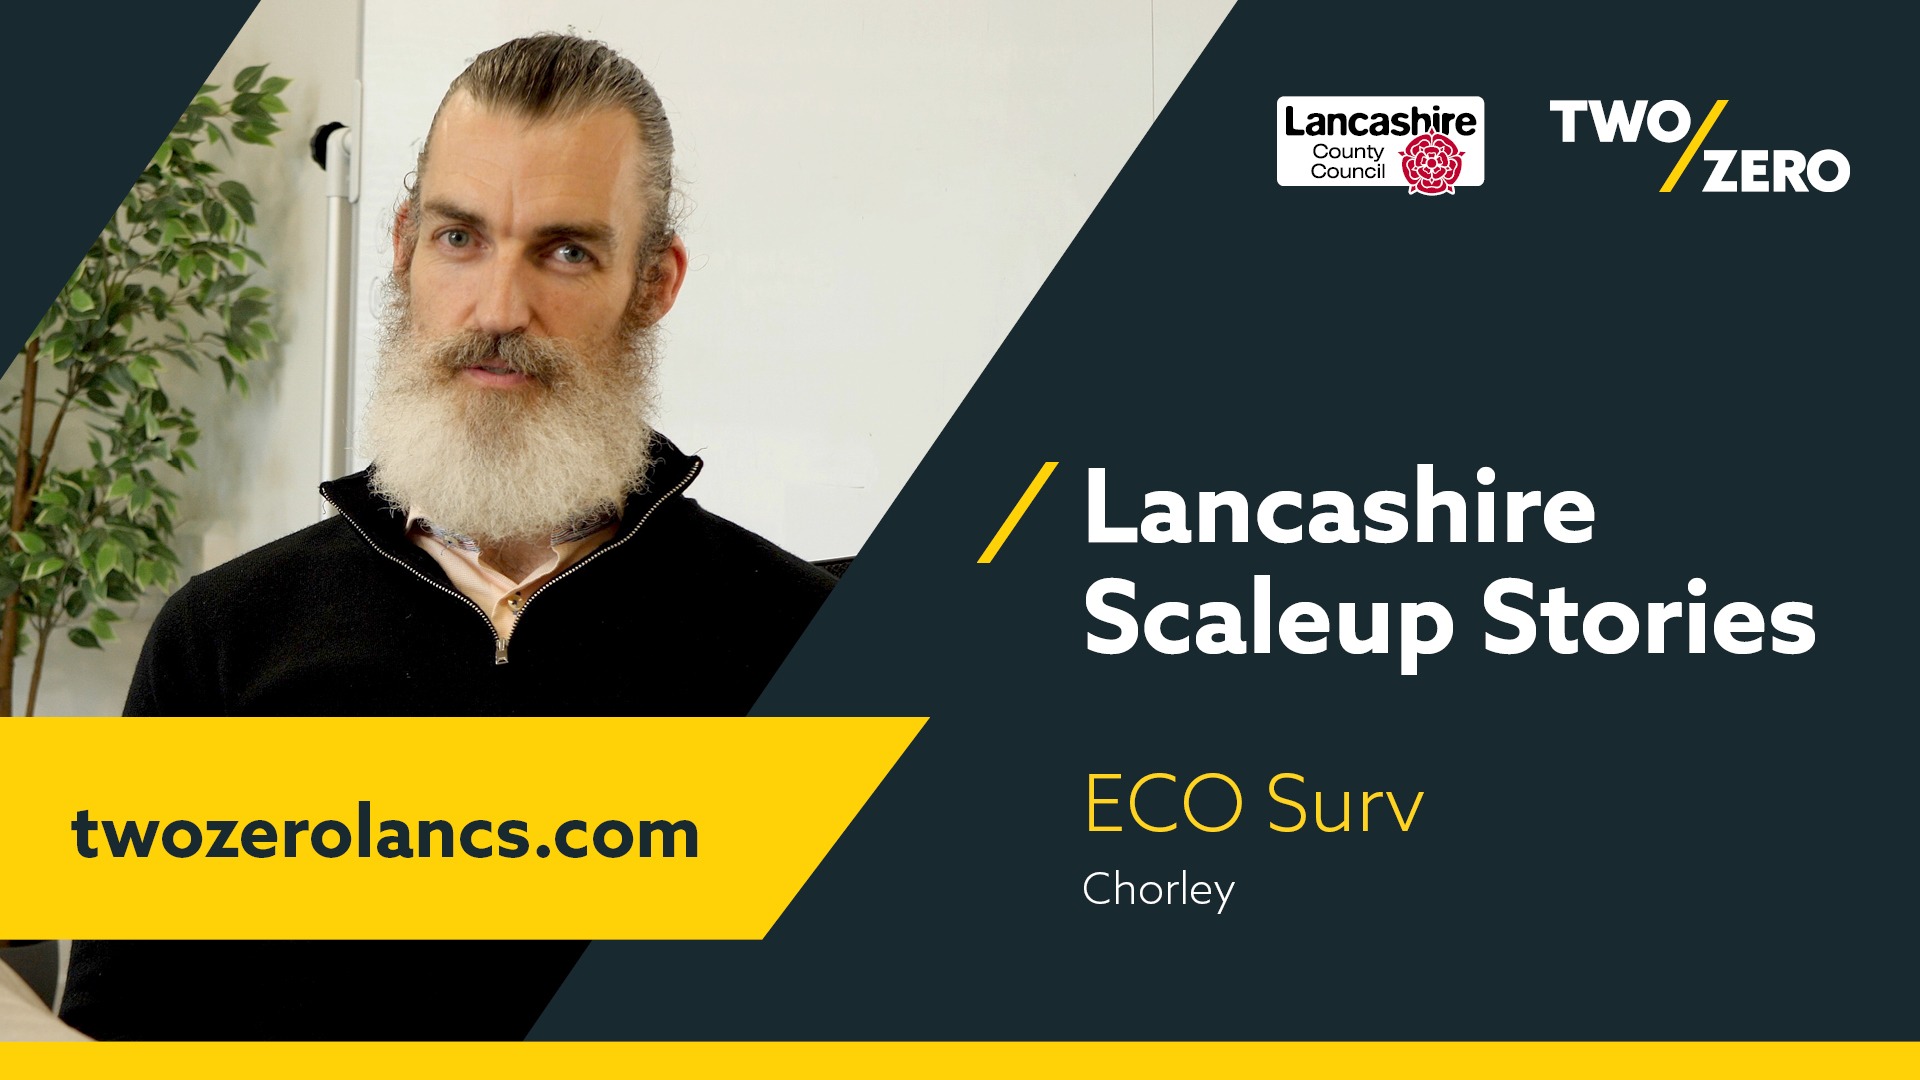 Lancashire Scaleup Stories / ECO Surv